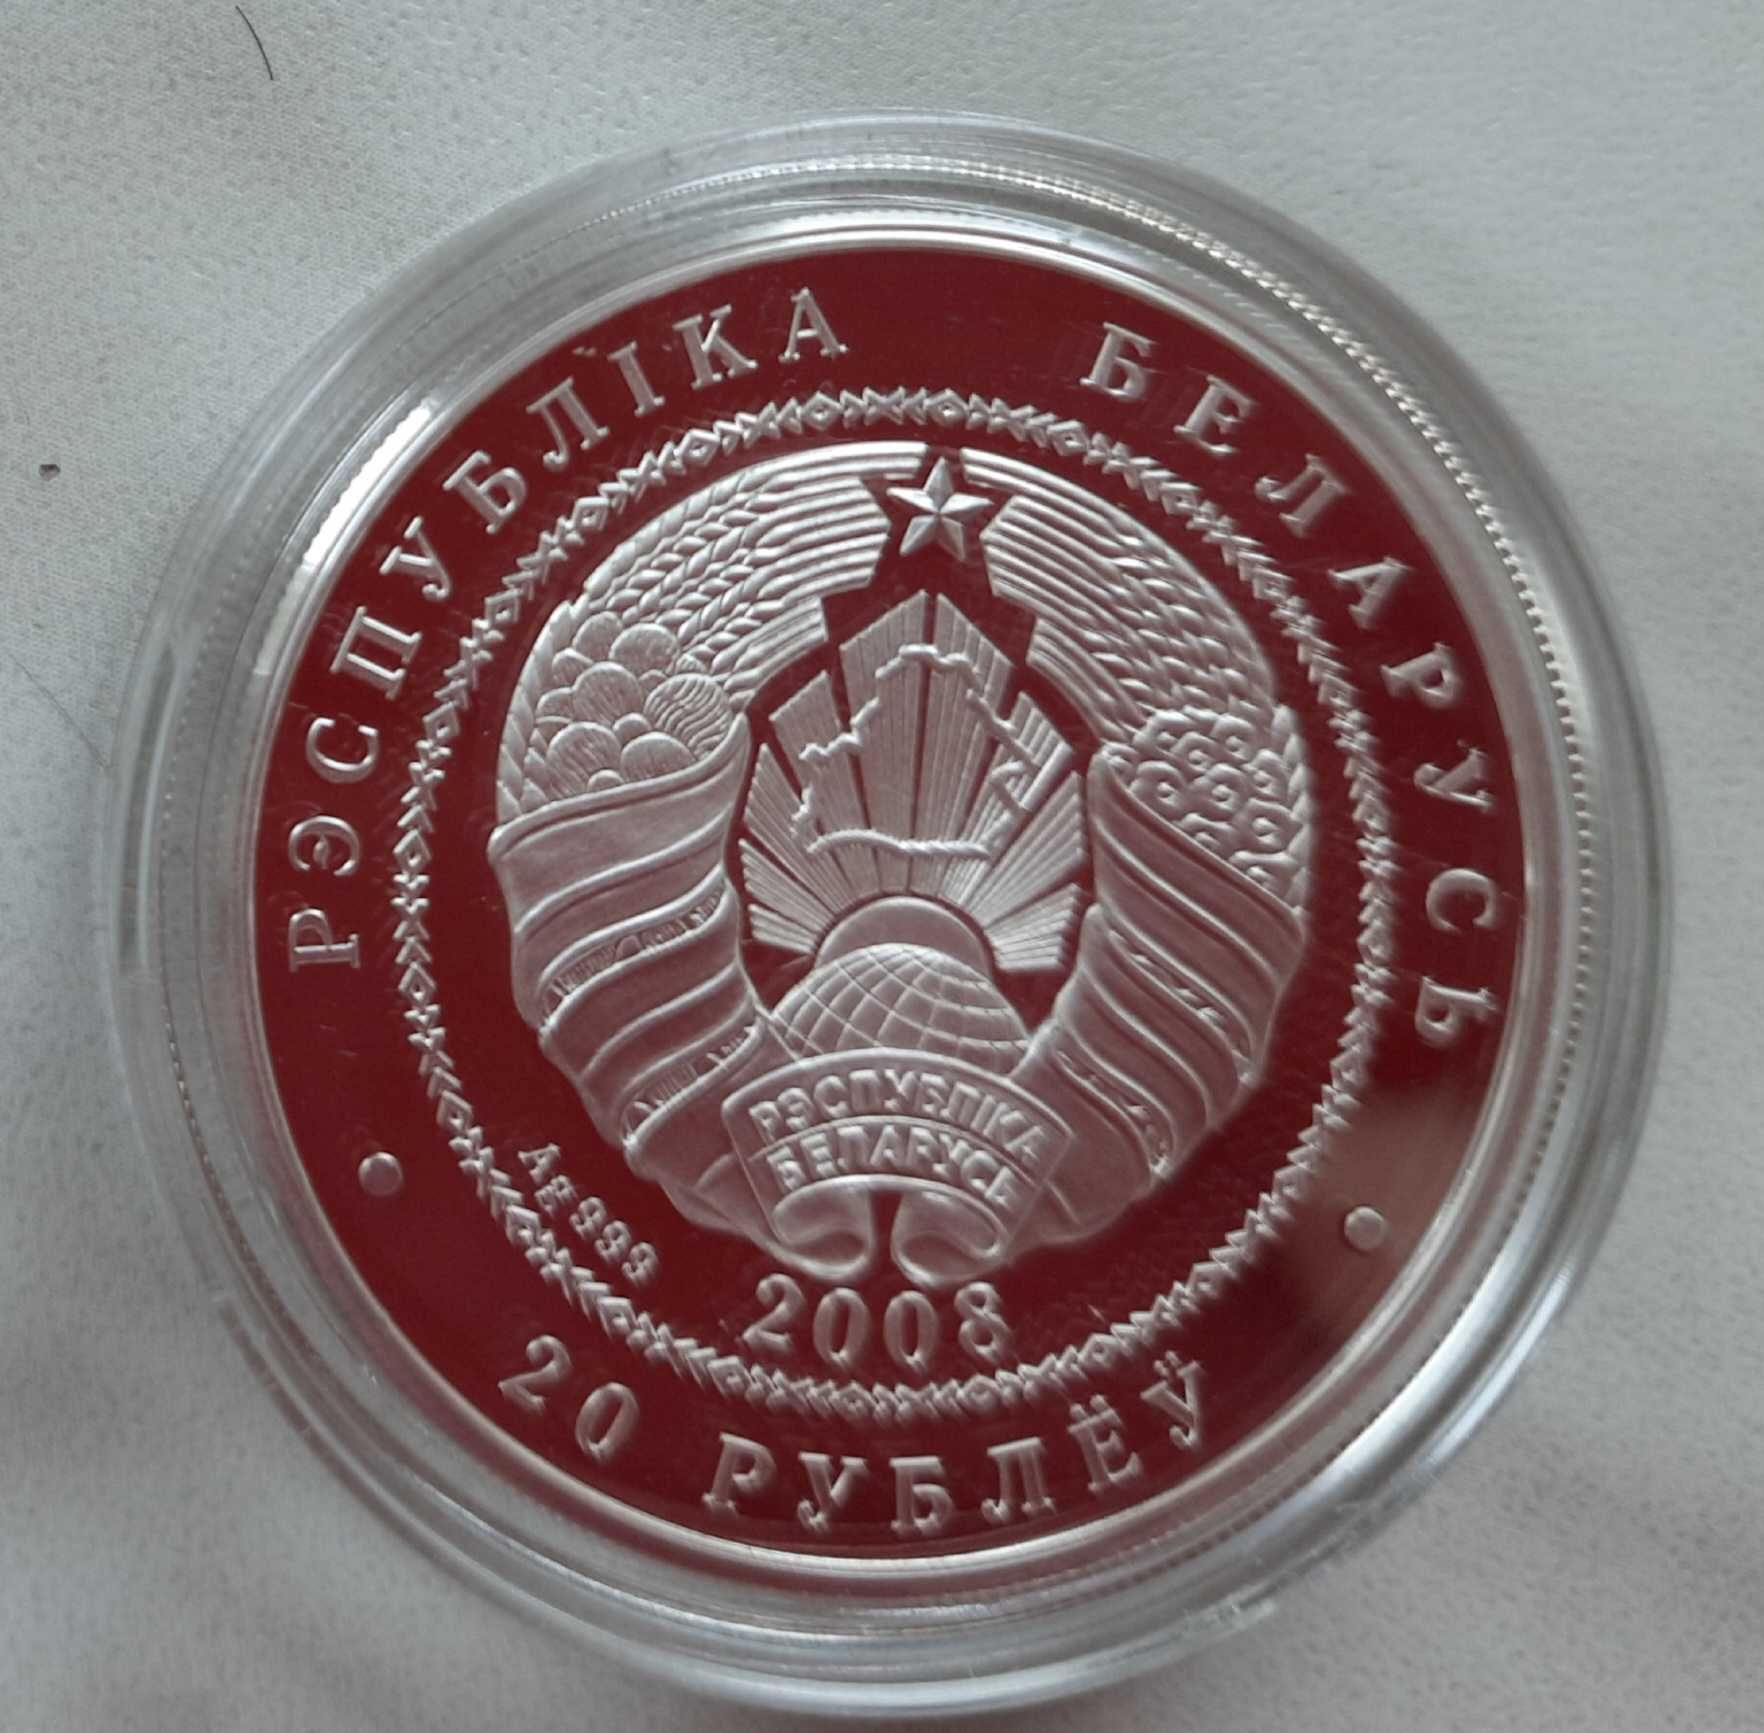 2 srebrne monety z Białorusi - 20 rubli z 2008 roku - rysie